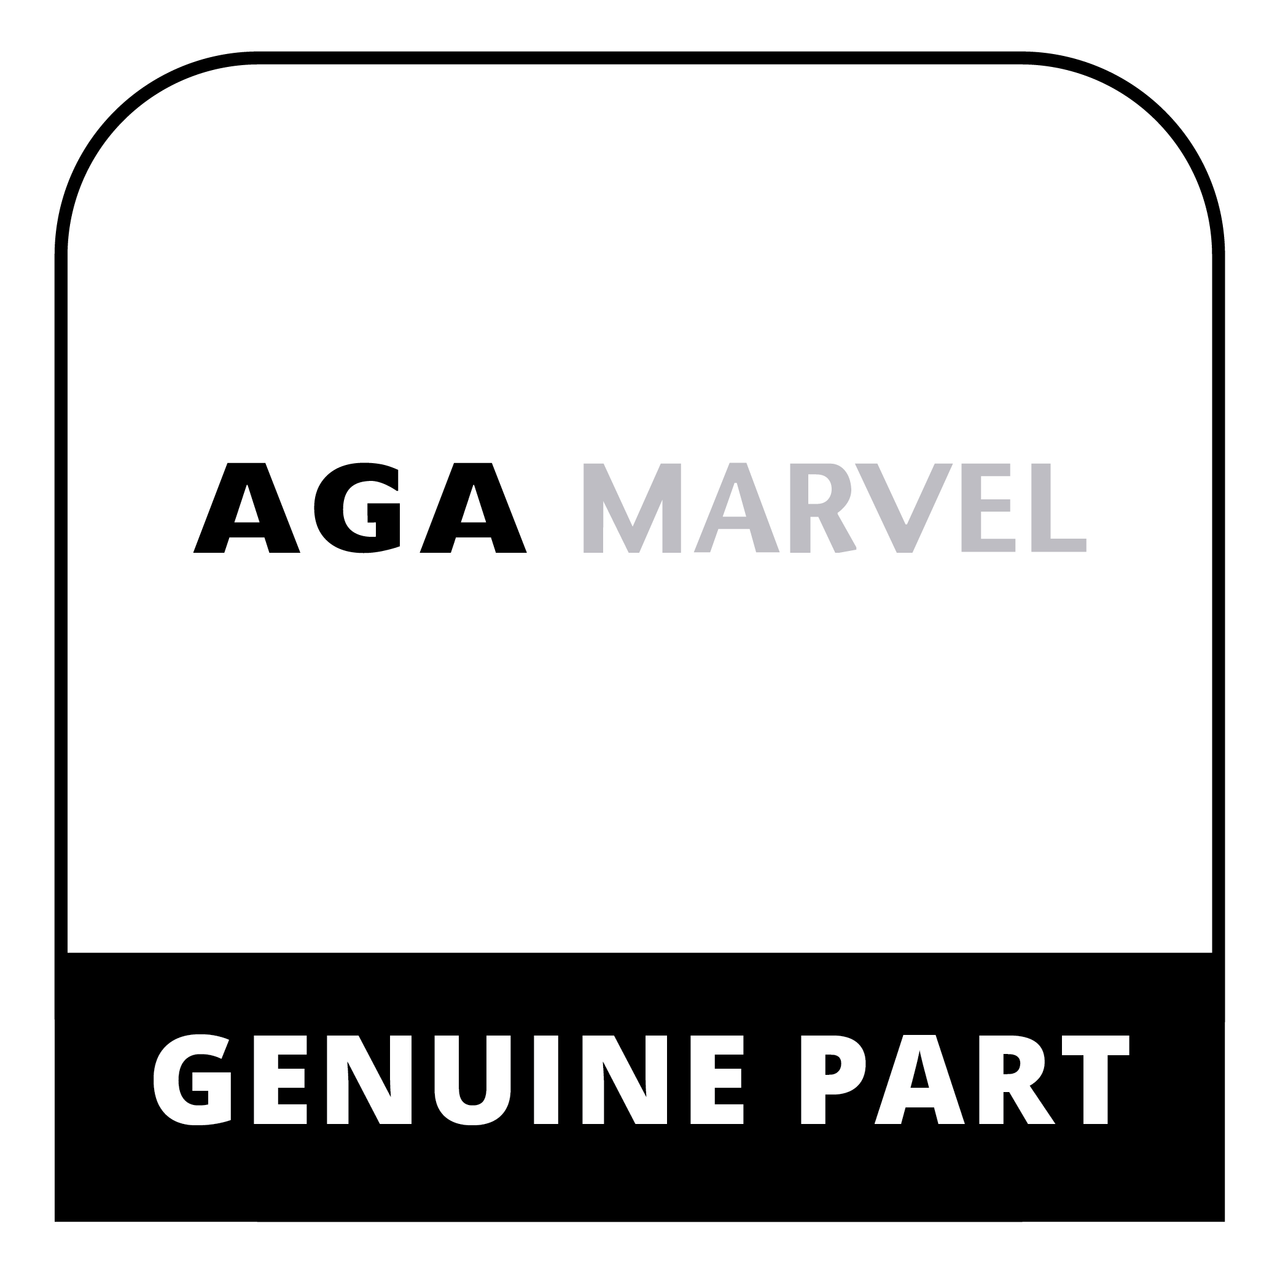 AGA Marvel RO4M998804 - Control Box (Emx) A156 - Genuine AGA Marvel Part